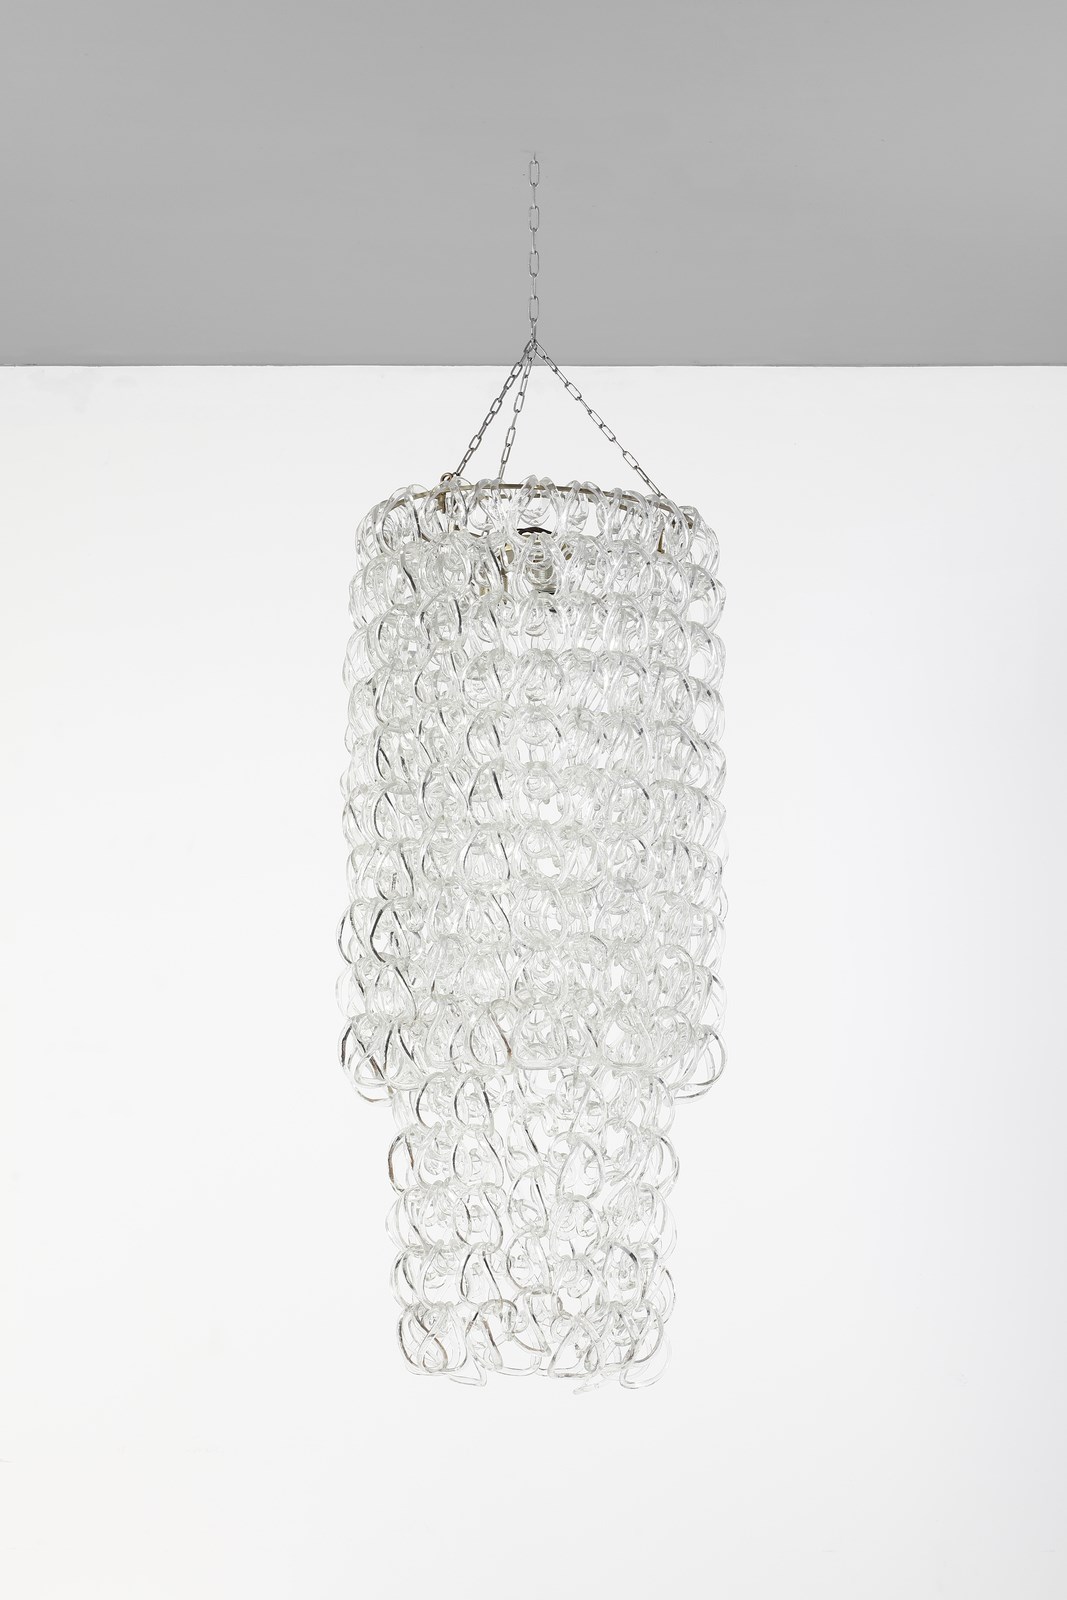 Giogali ceiling lamp for Vetreria Vistosi (Angelo Mangiarotti)